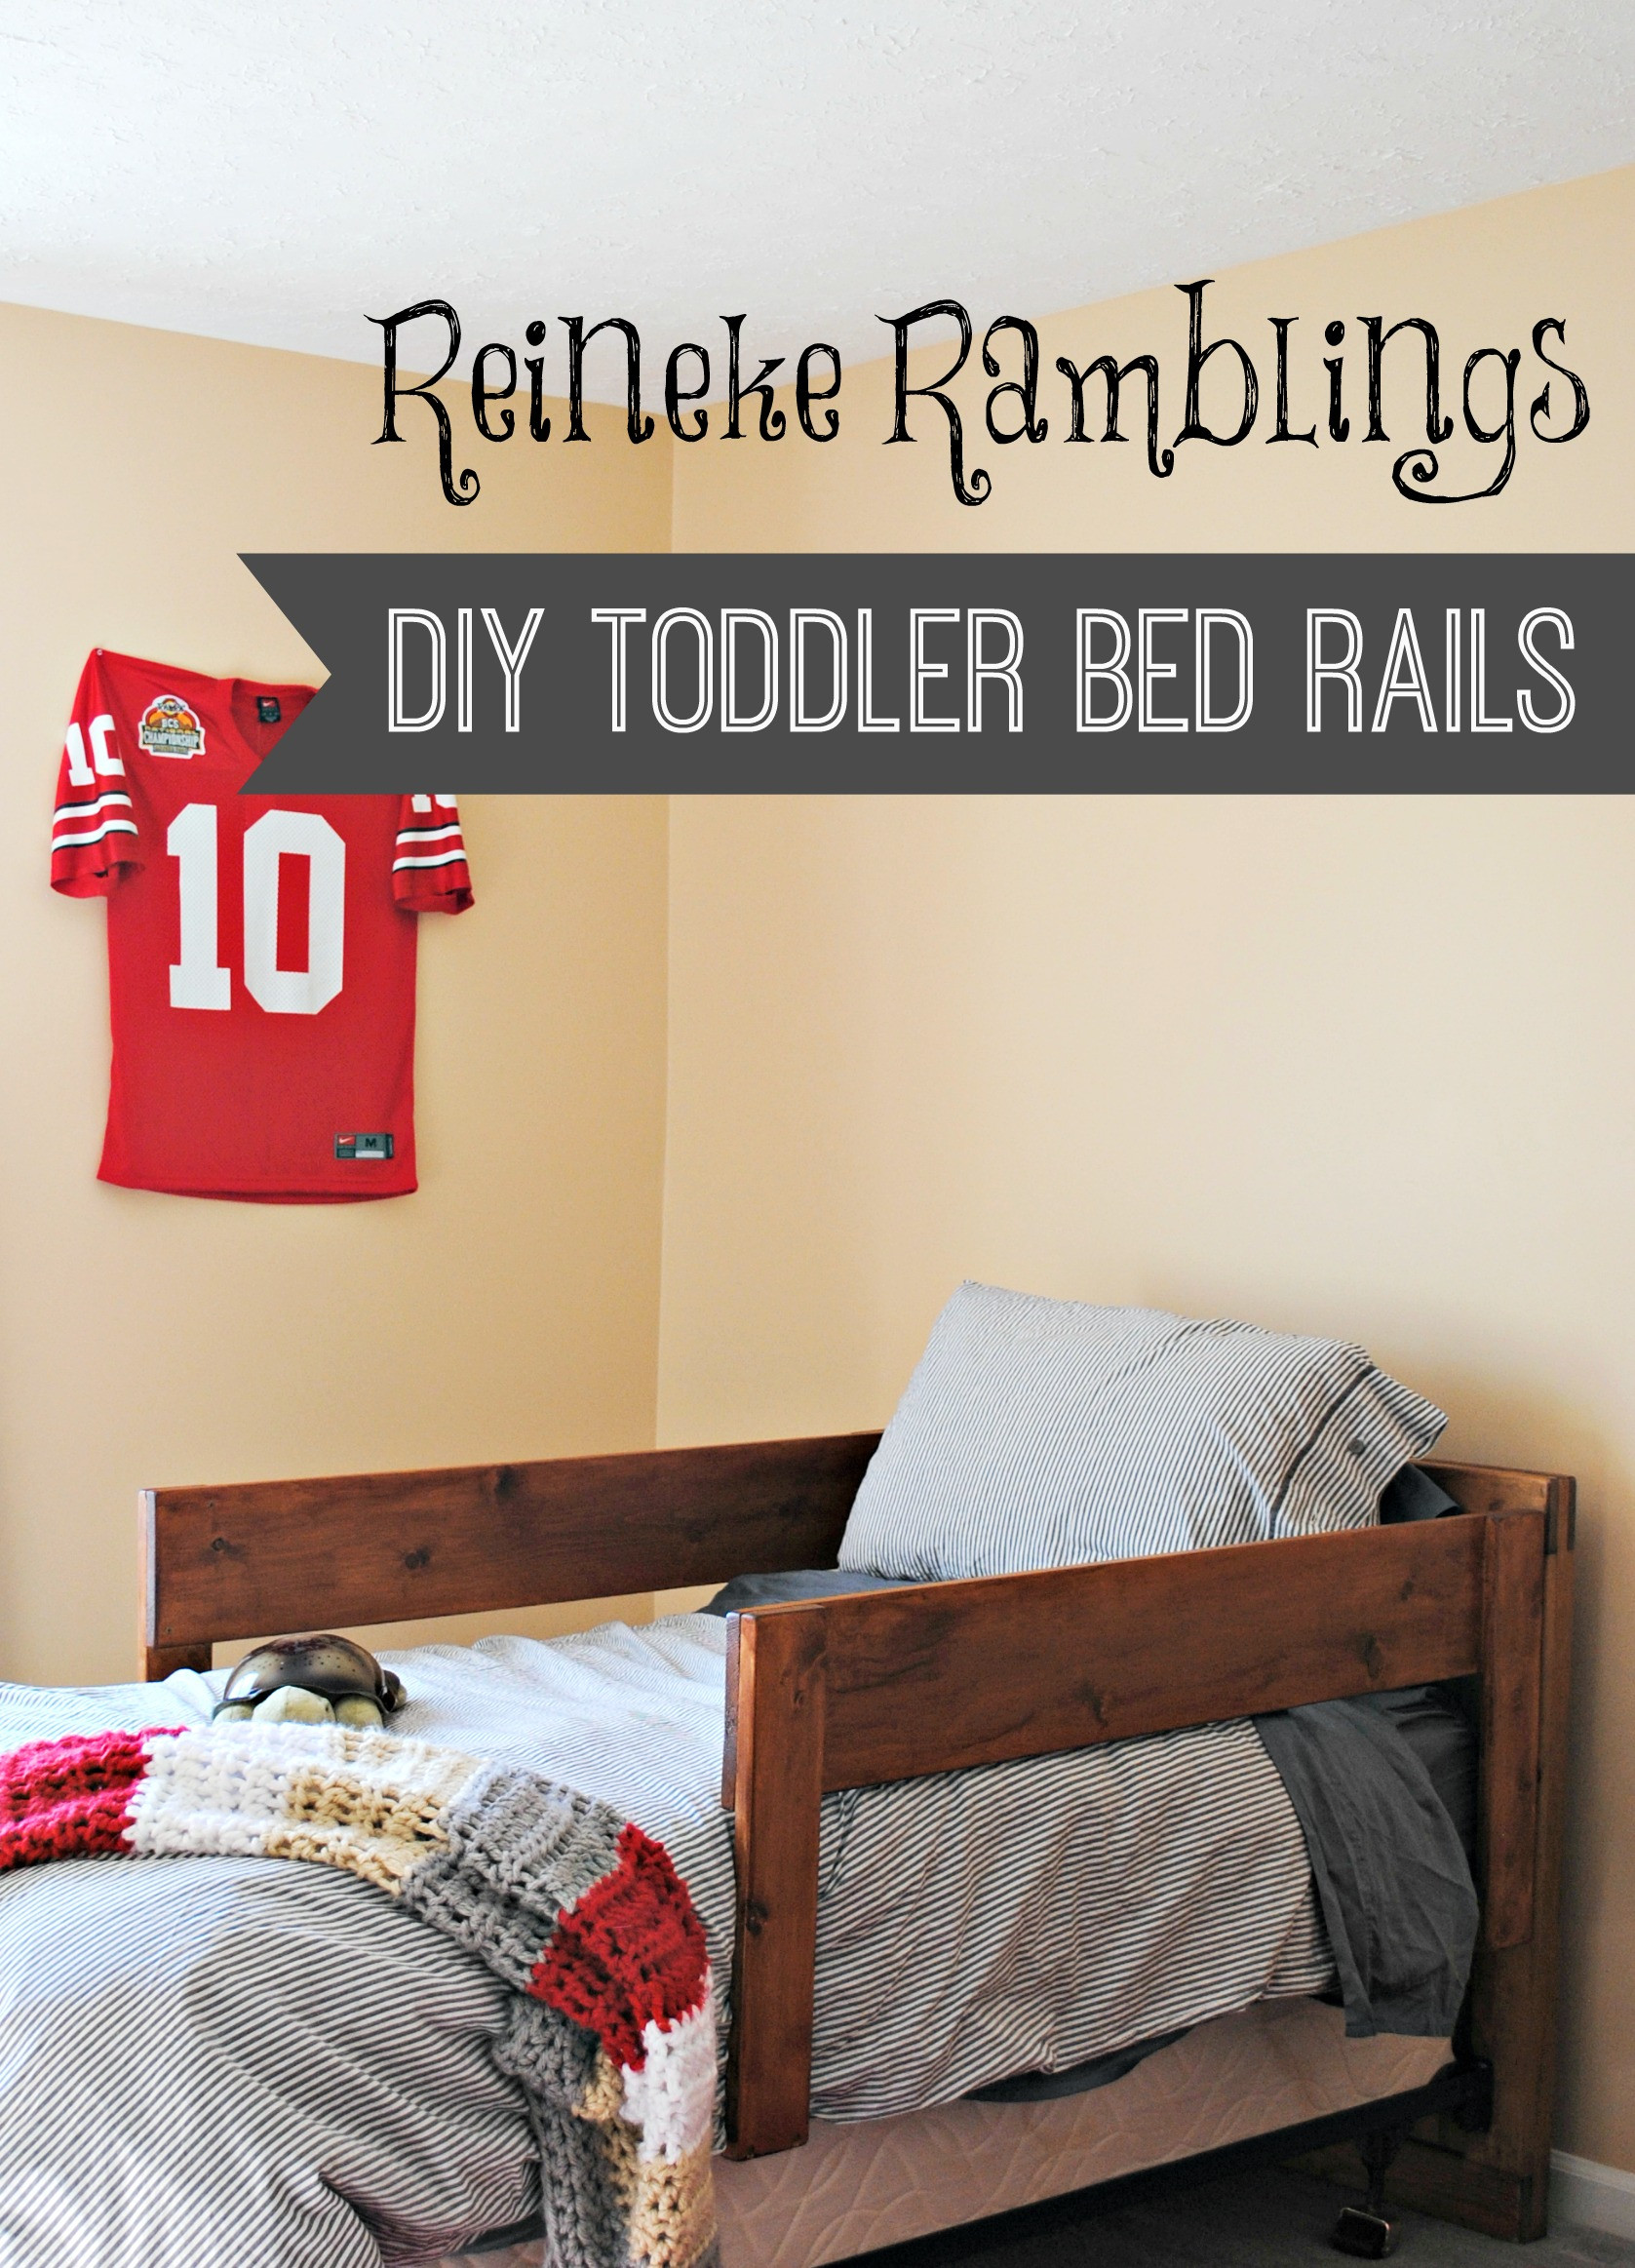 DIY Toddler Beds
 DIY Toddler Bed Rails cypress wool